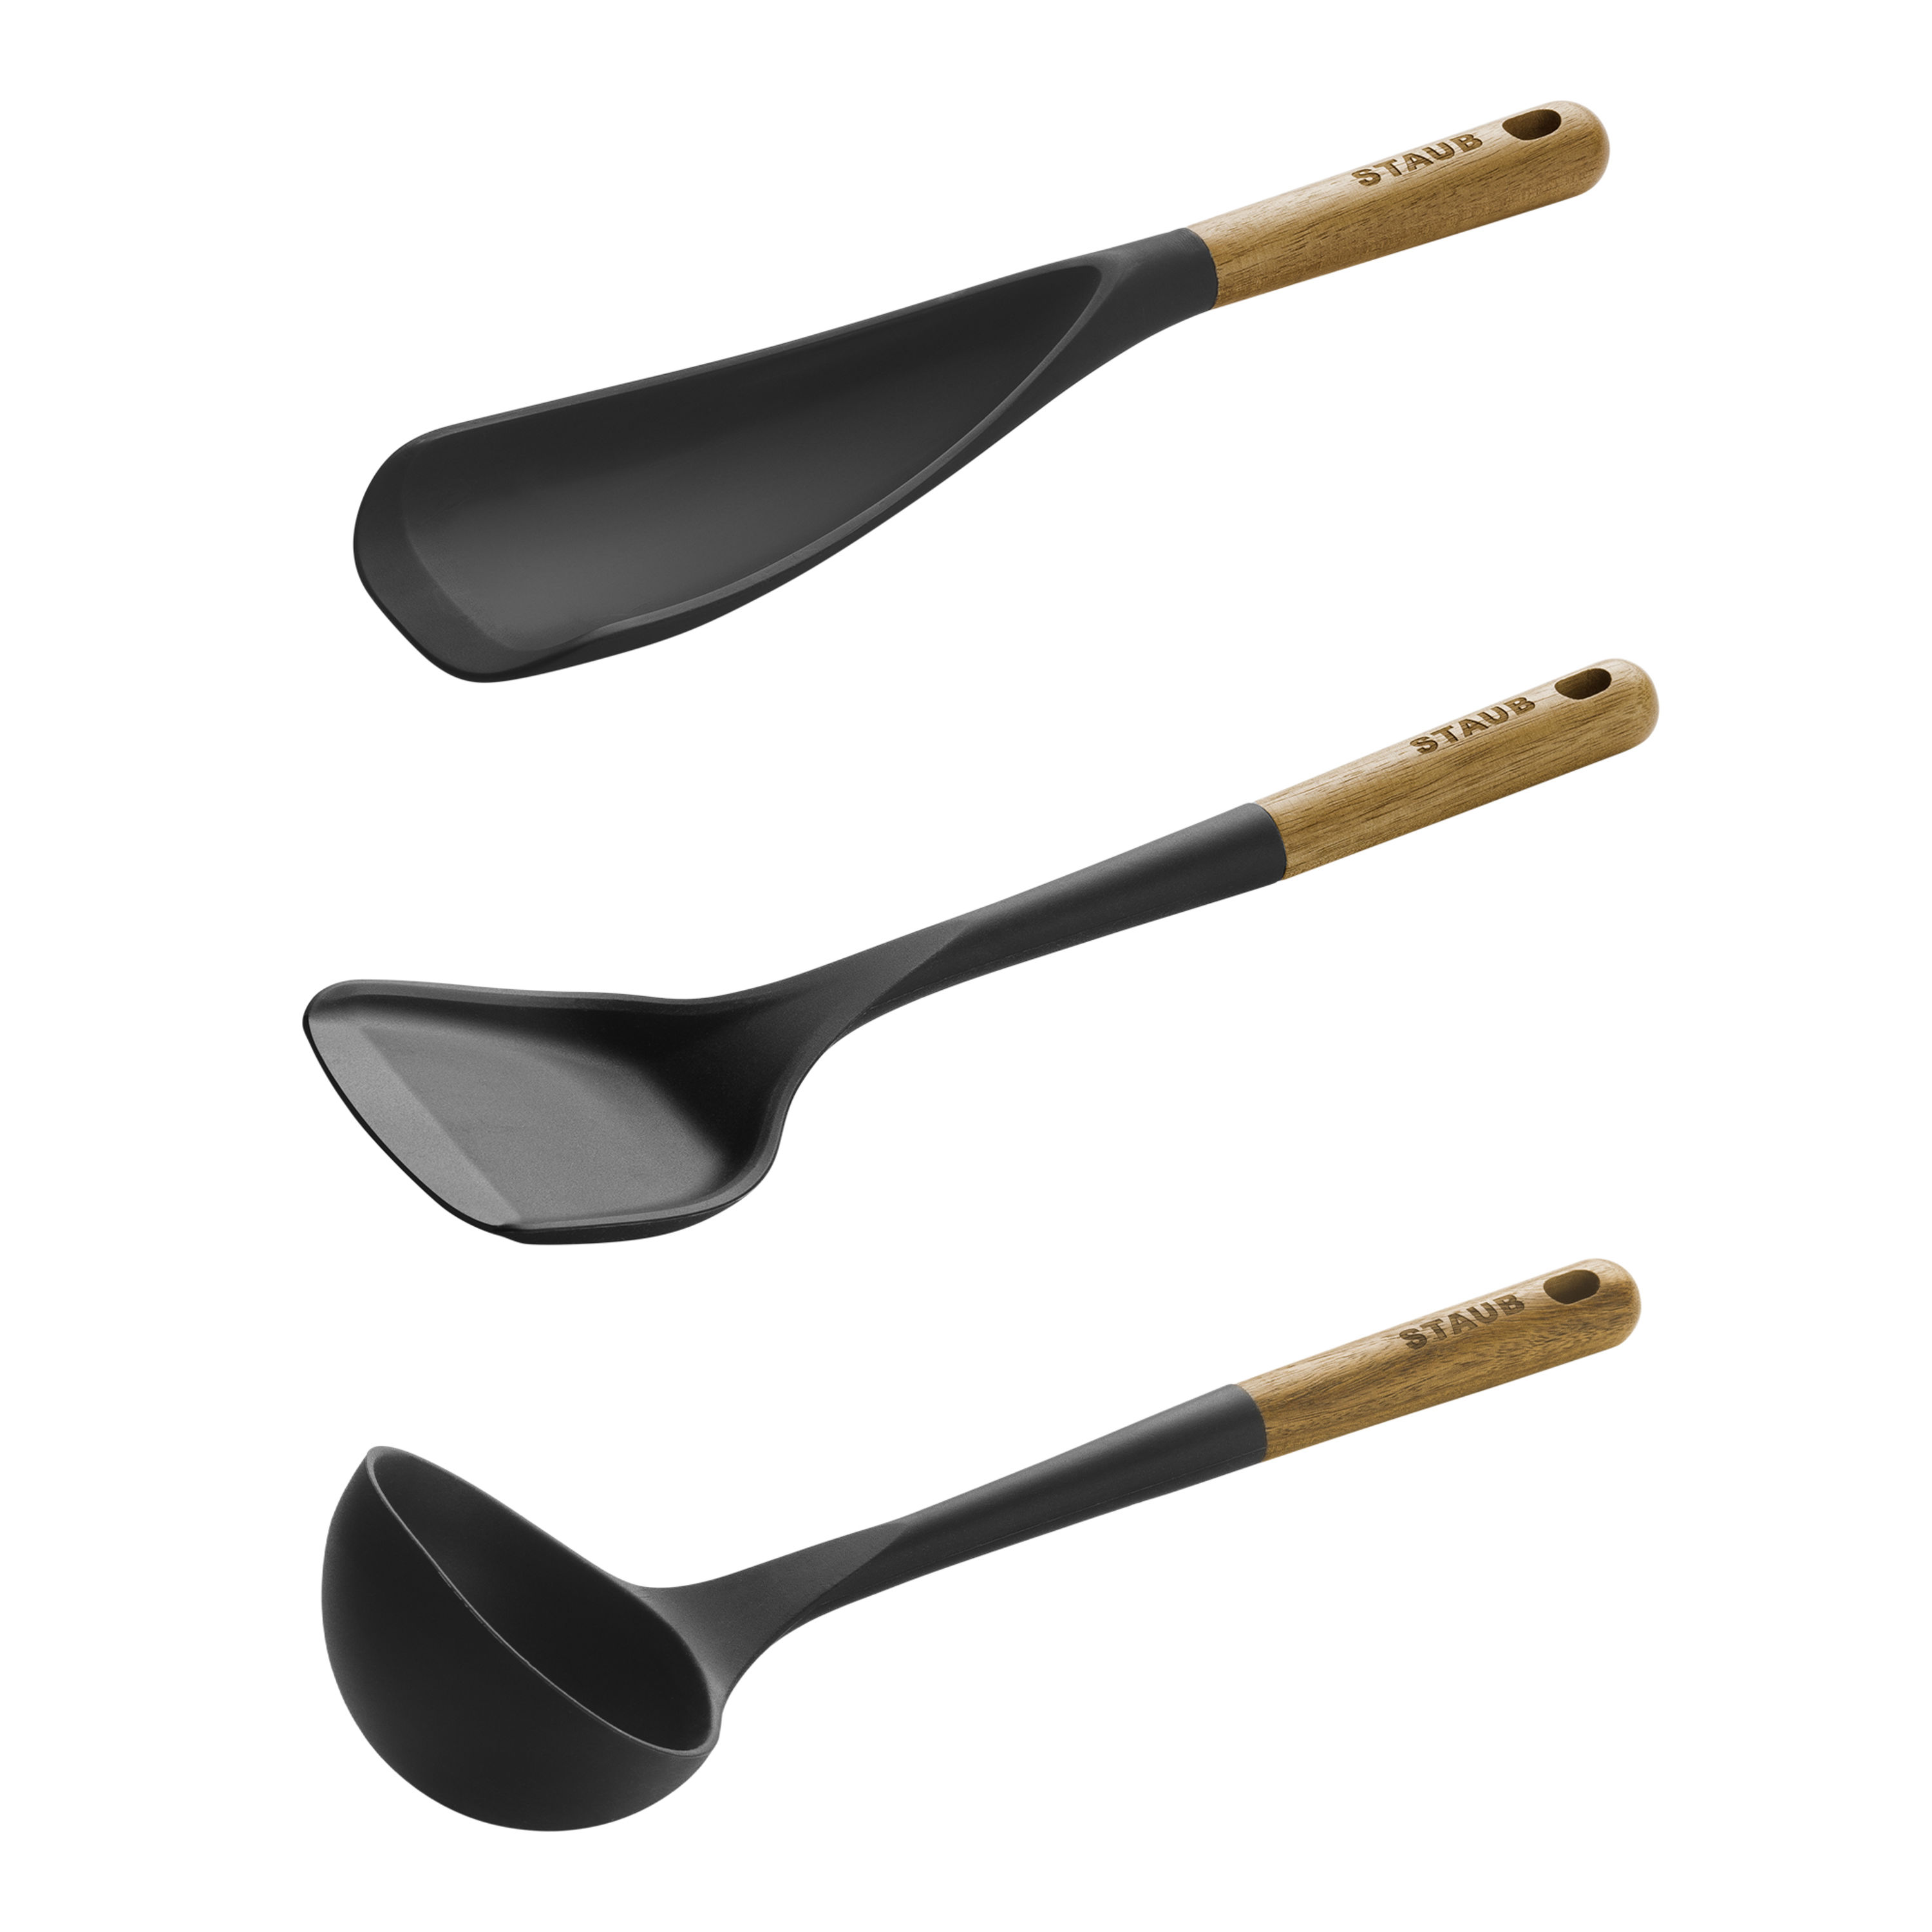 Black Silicone Spatula Set - Wooden handles (8 Pcs)